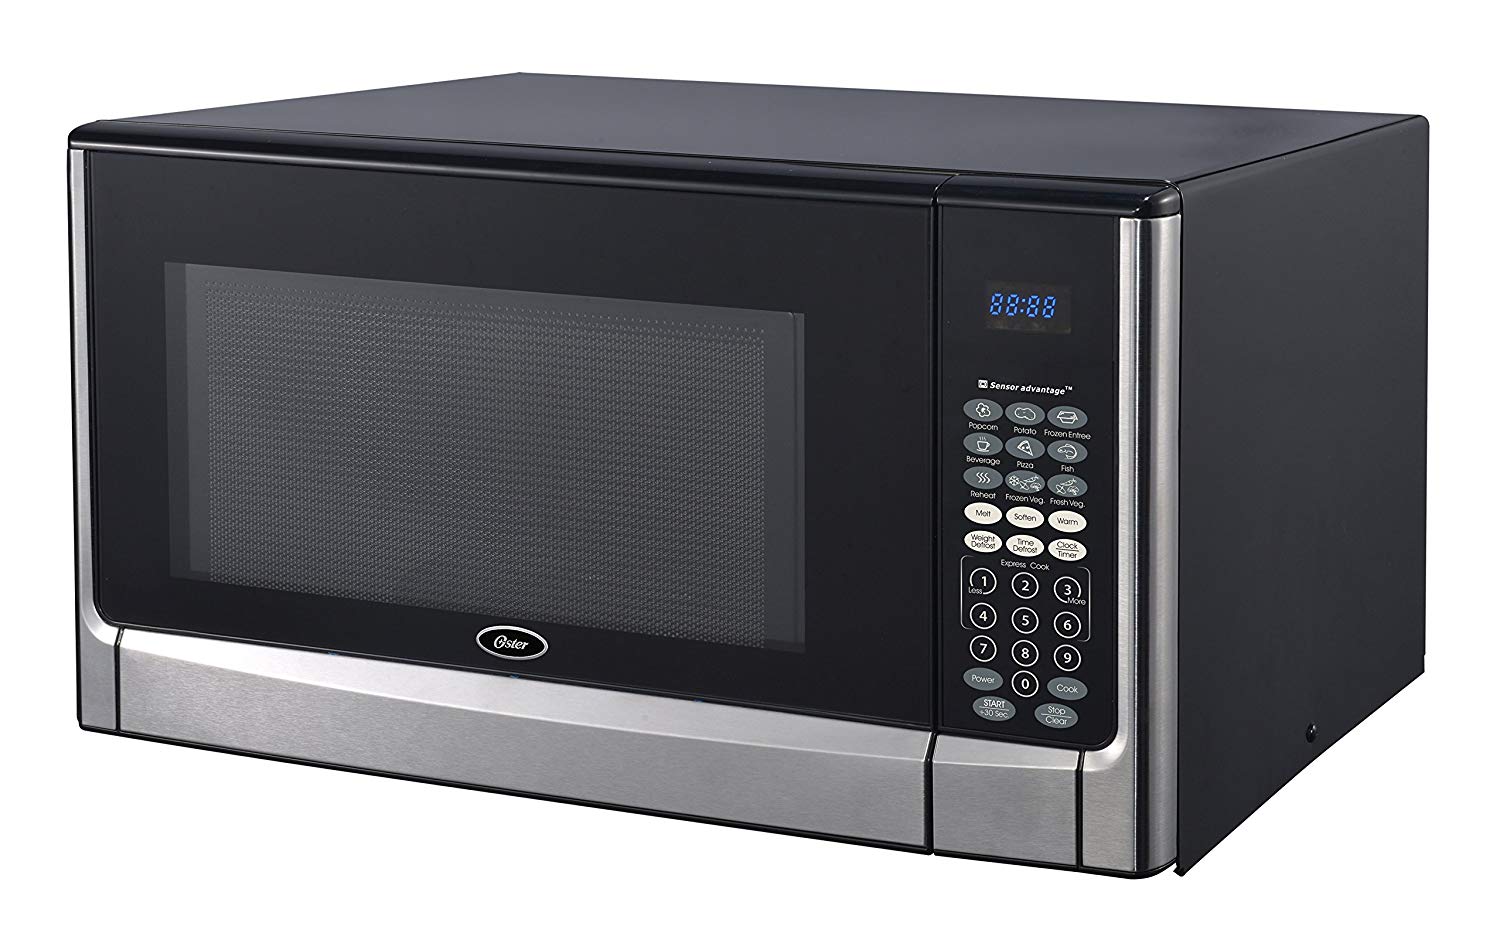 Oster OGYZ1604VS 1100W Inverter/Sensor Microwave Oven, 1.6 cu. ft. Stainless Steel/Black